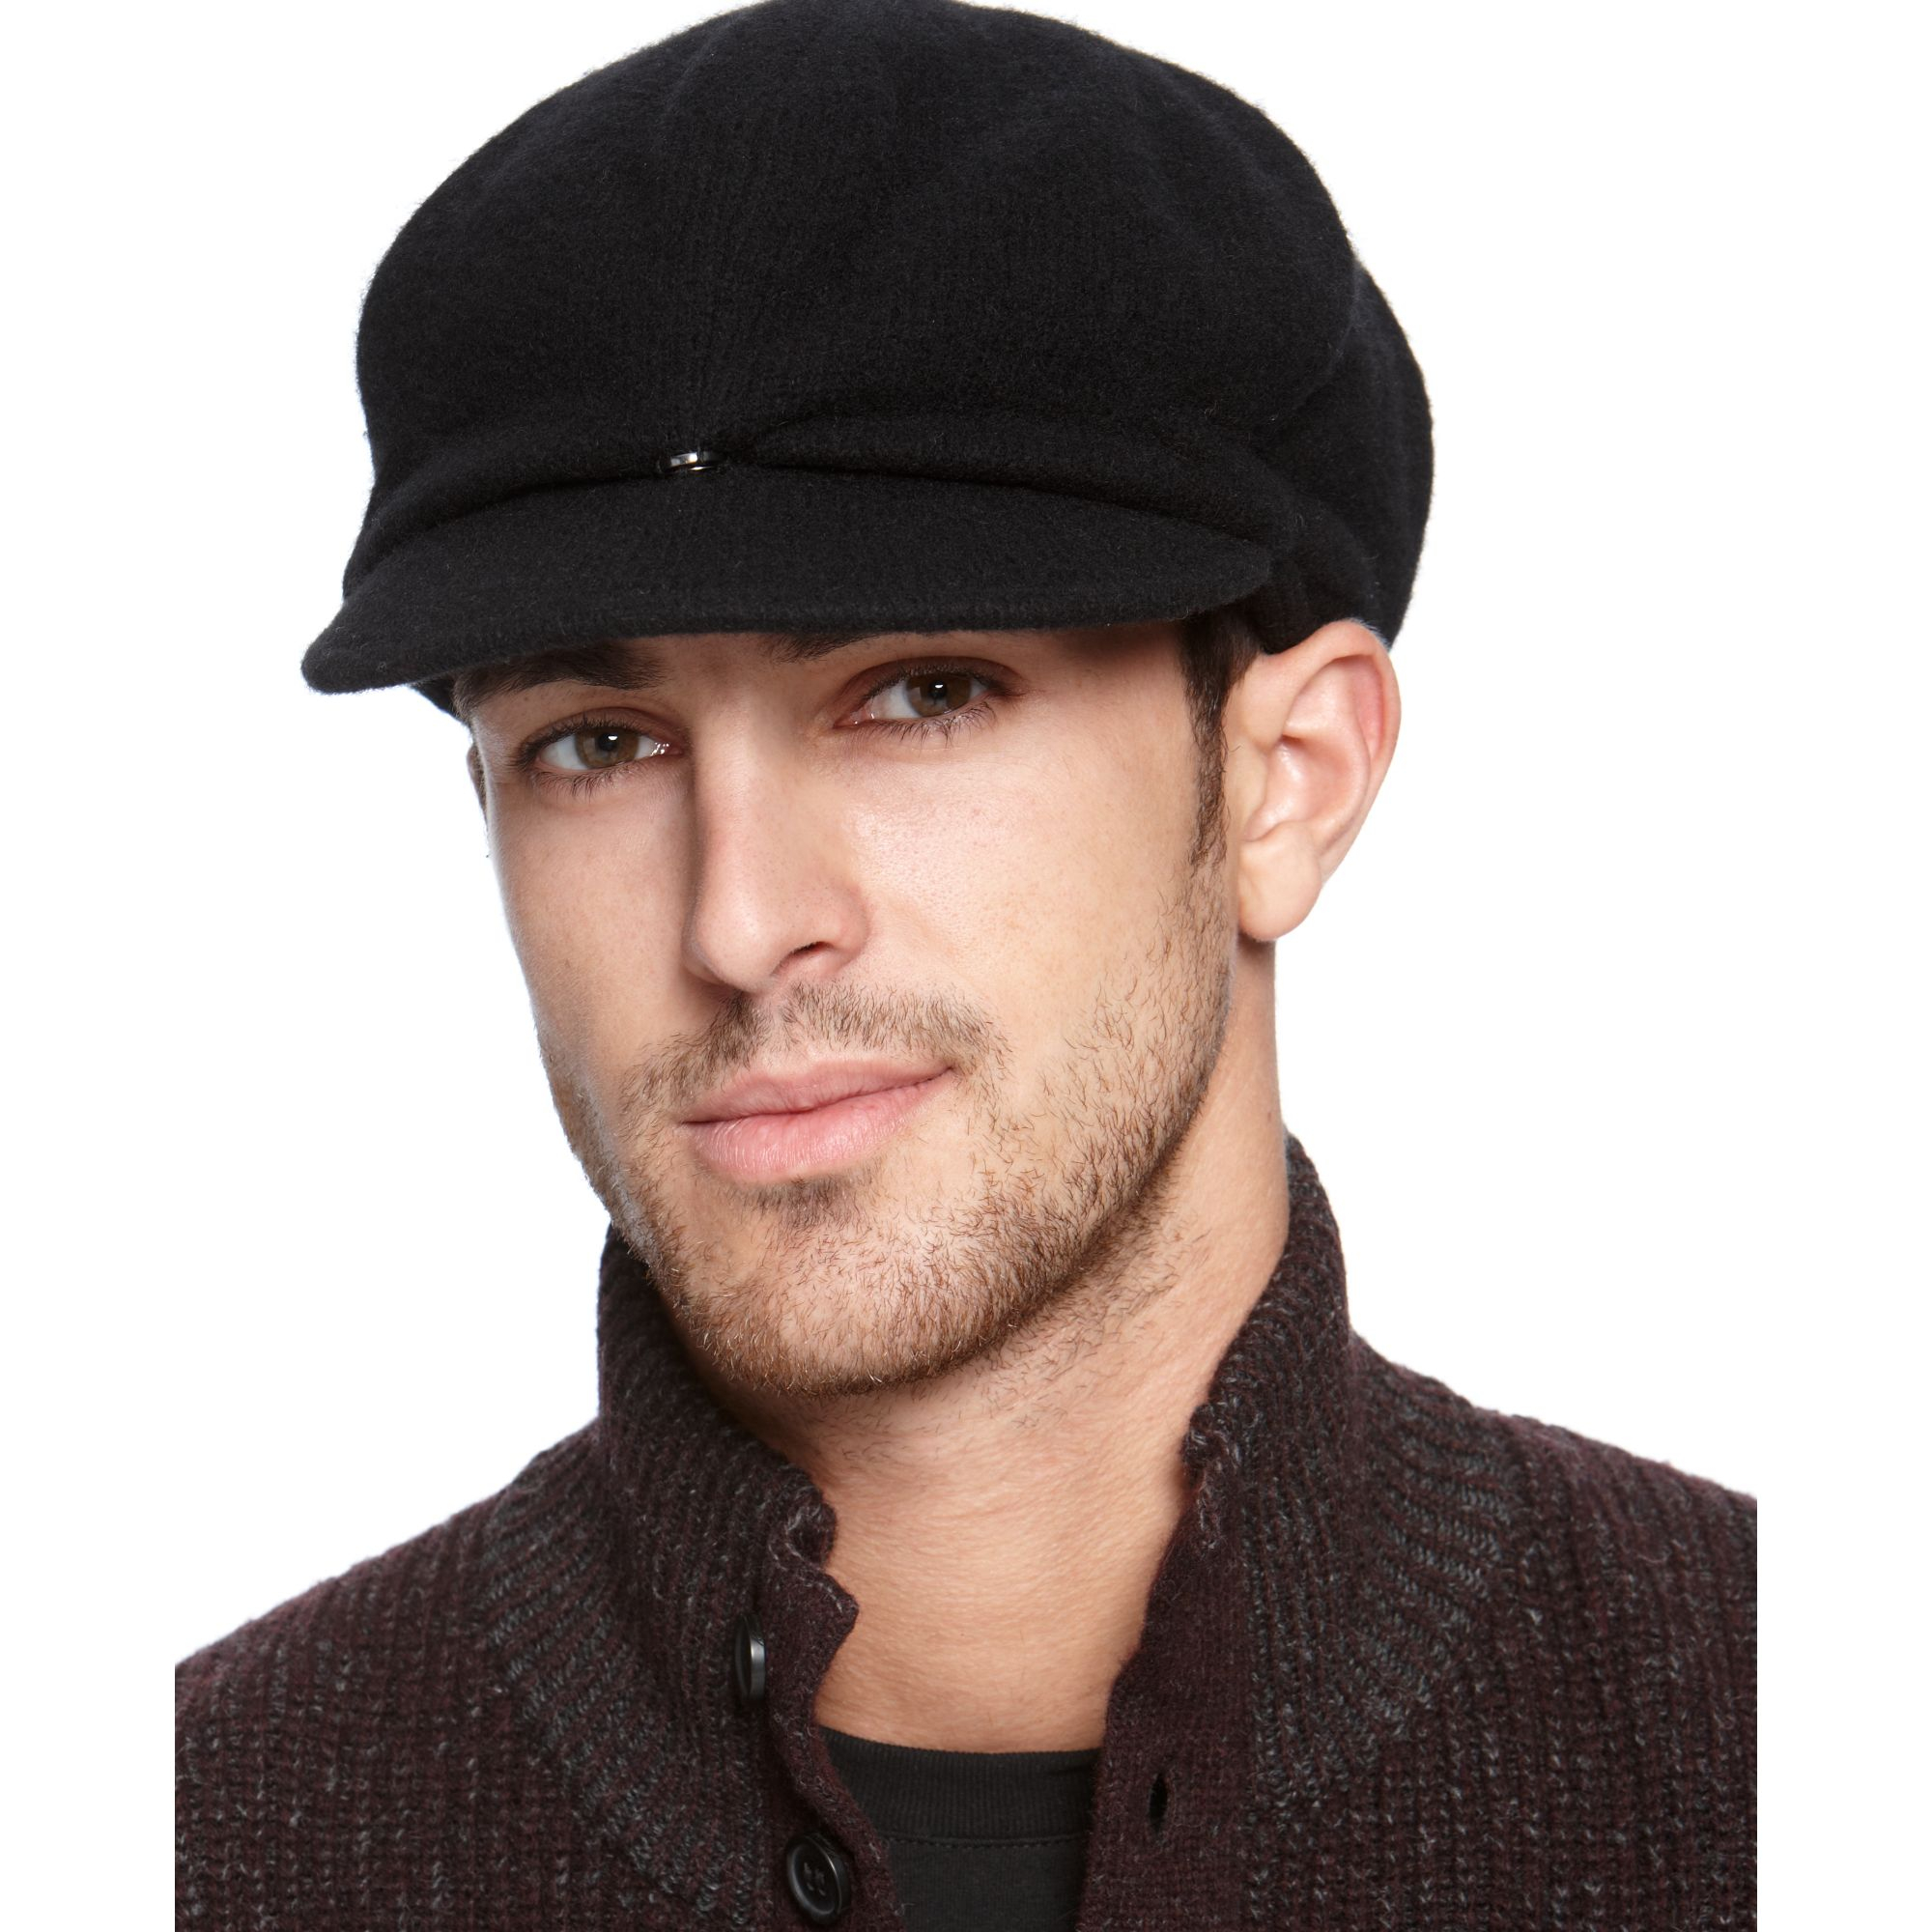 Ralph Lauren Jersey Newsboy Hat in Charcoal (Gray) for Men - Lyst